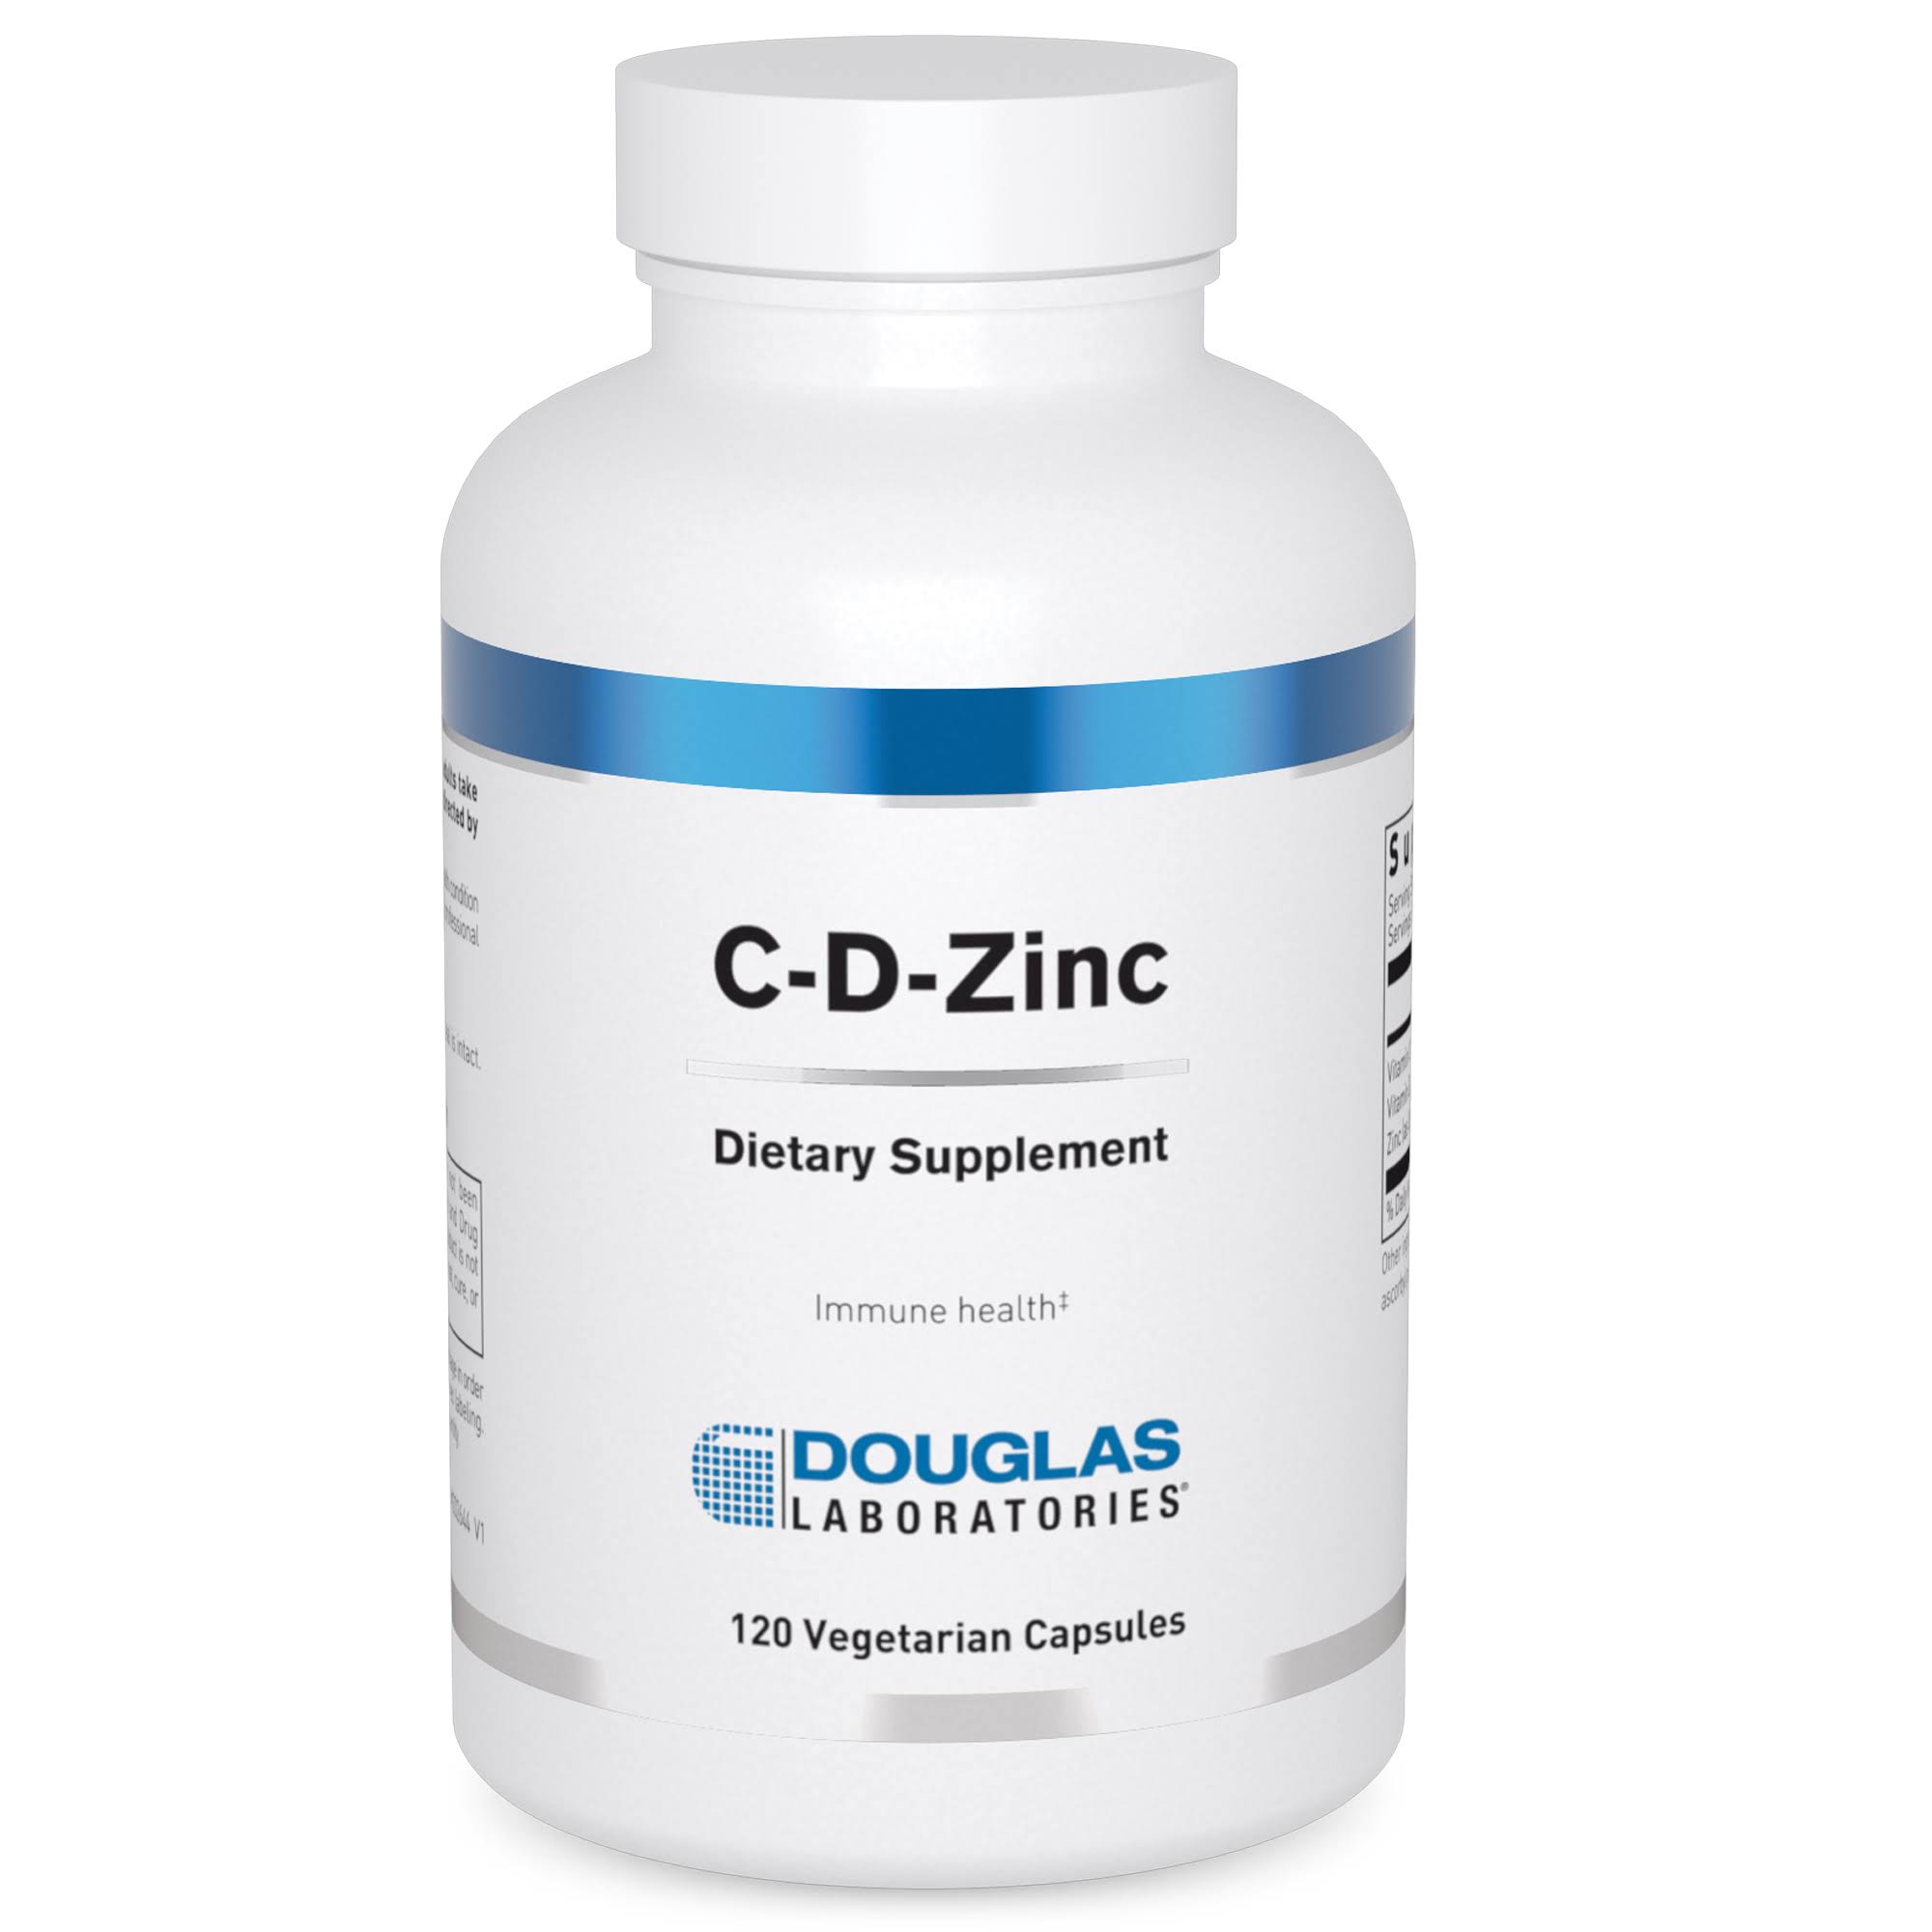 Douglas Laboratories - C-D-Zinc - 120 Vegetarian Capsules